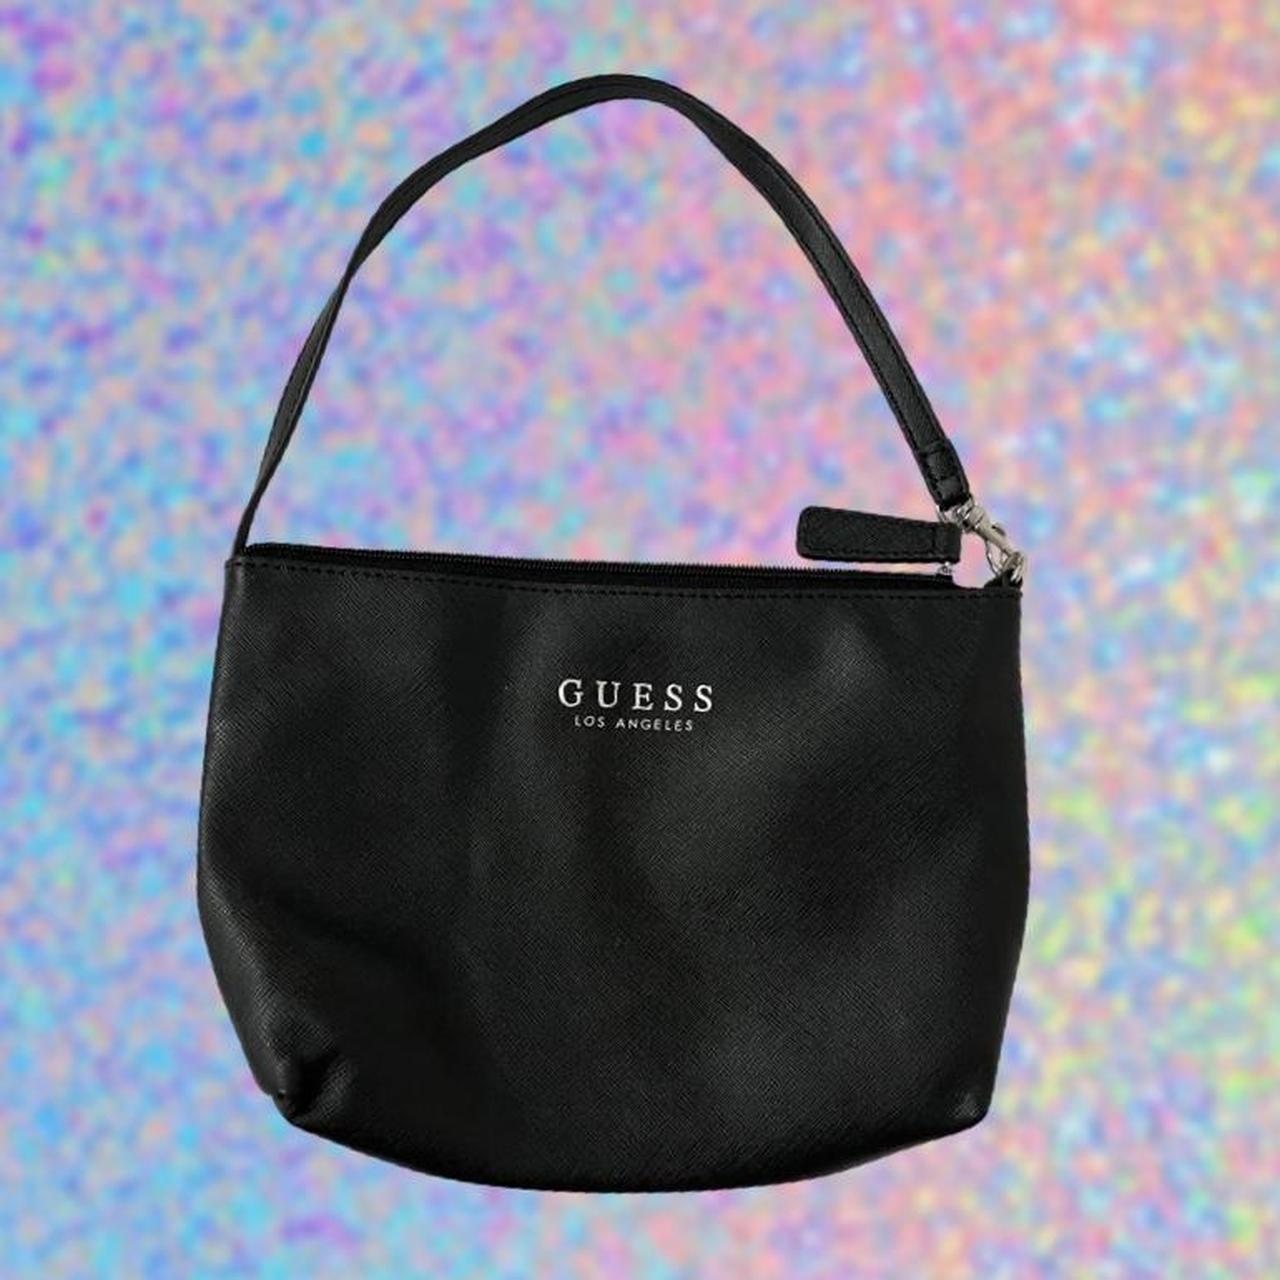 Guess purse | Guess purses, Guess handbags, Tan handbags